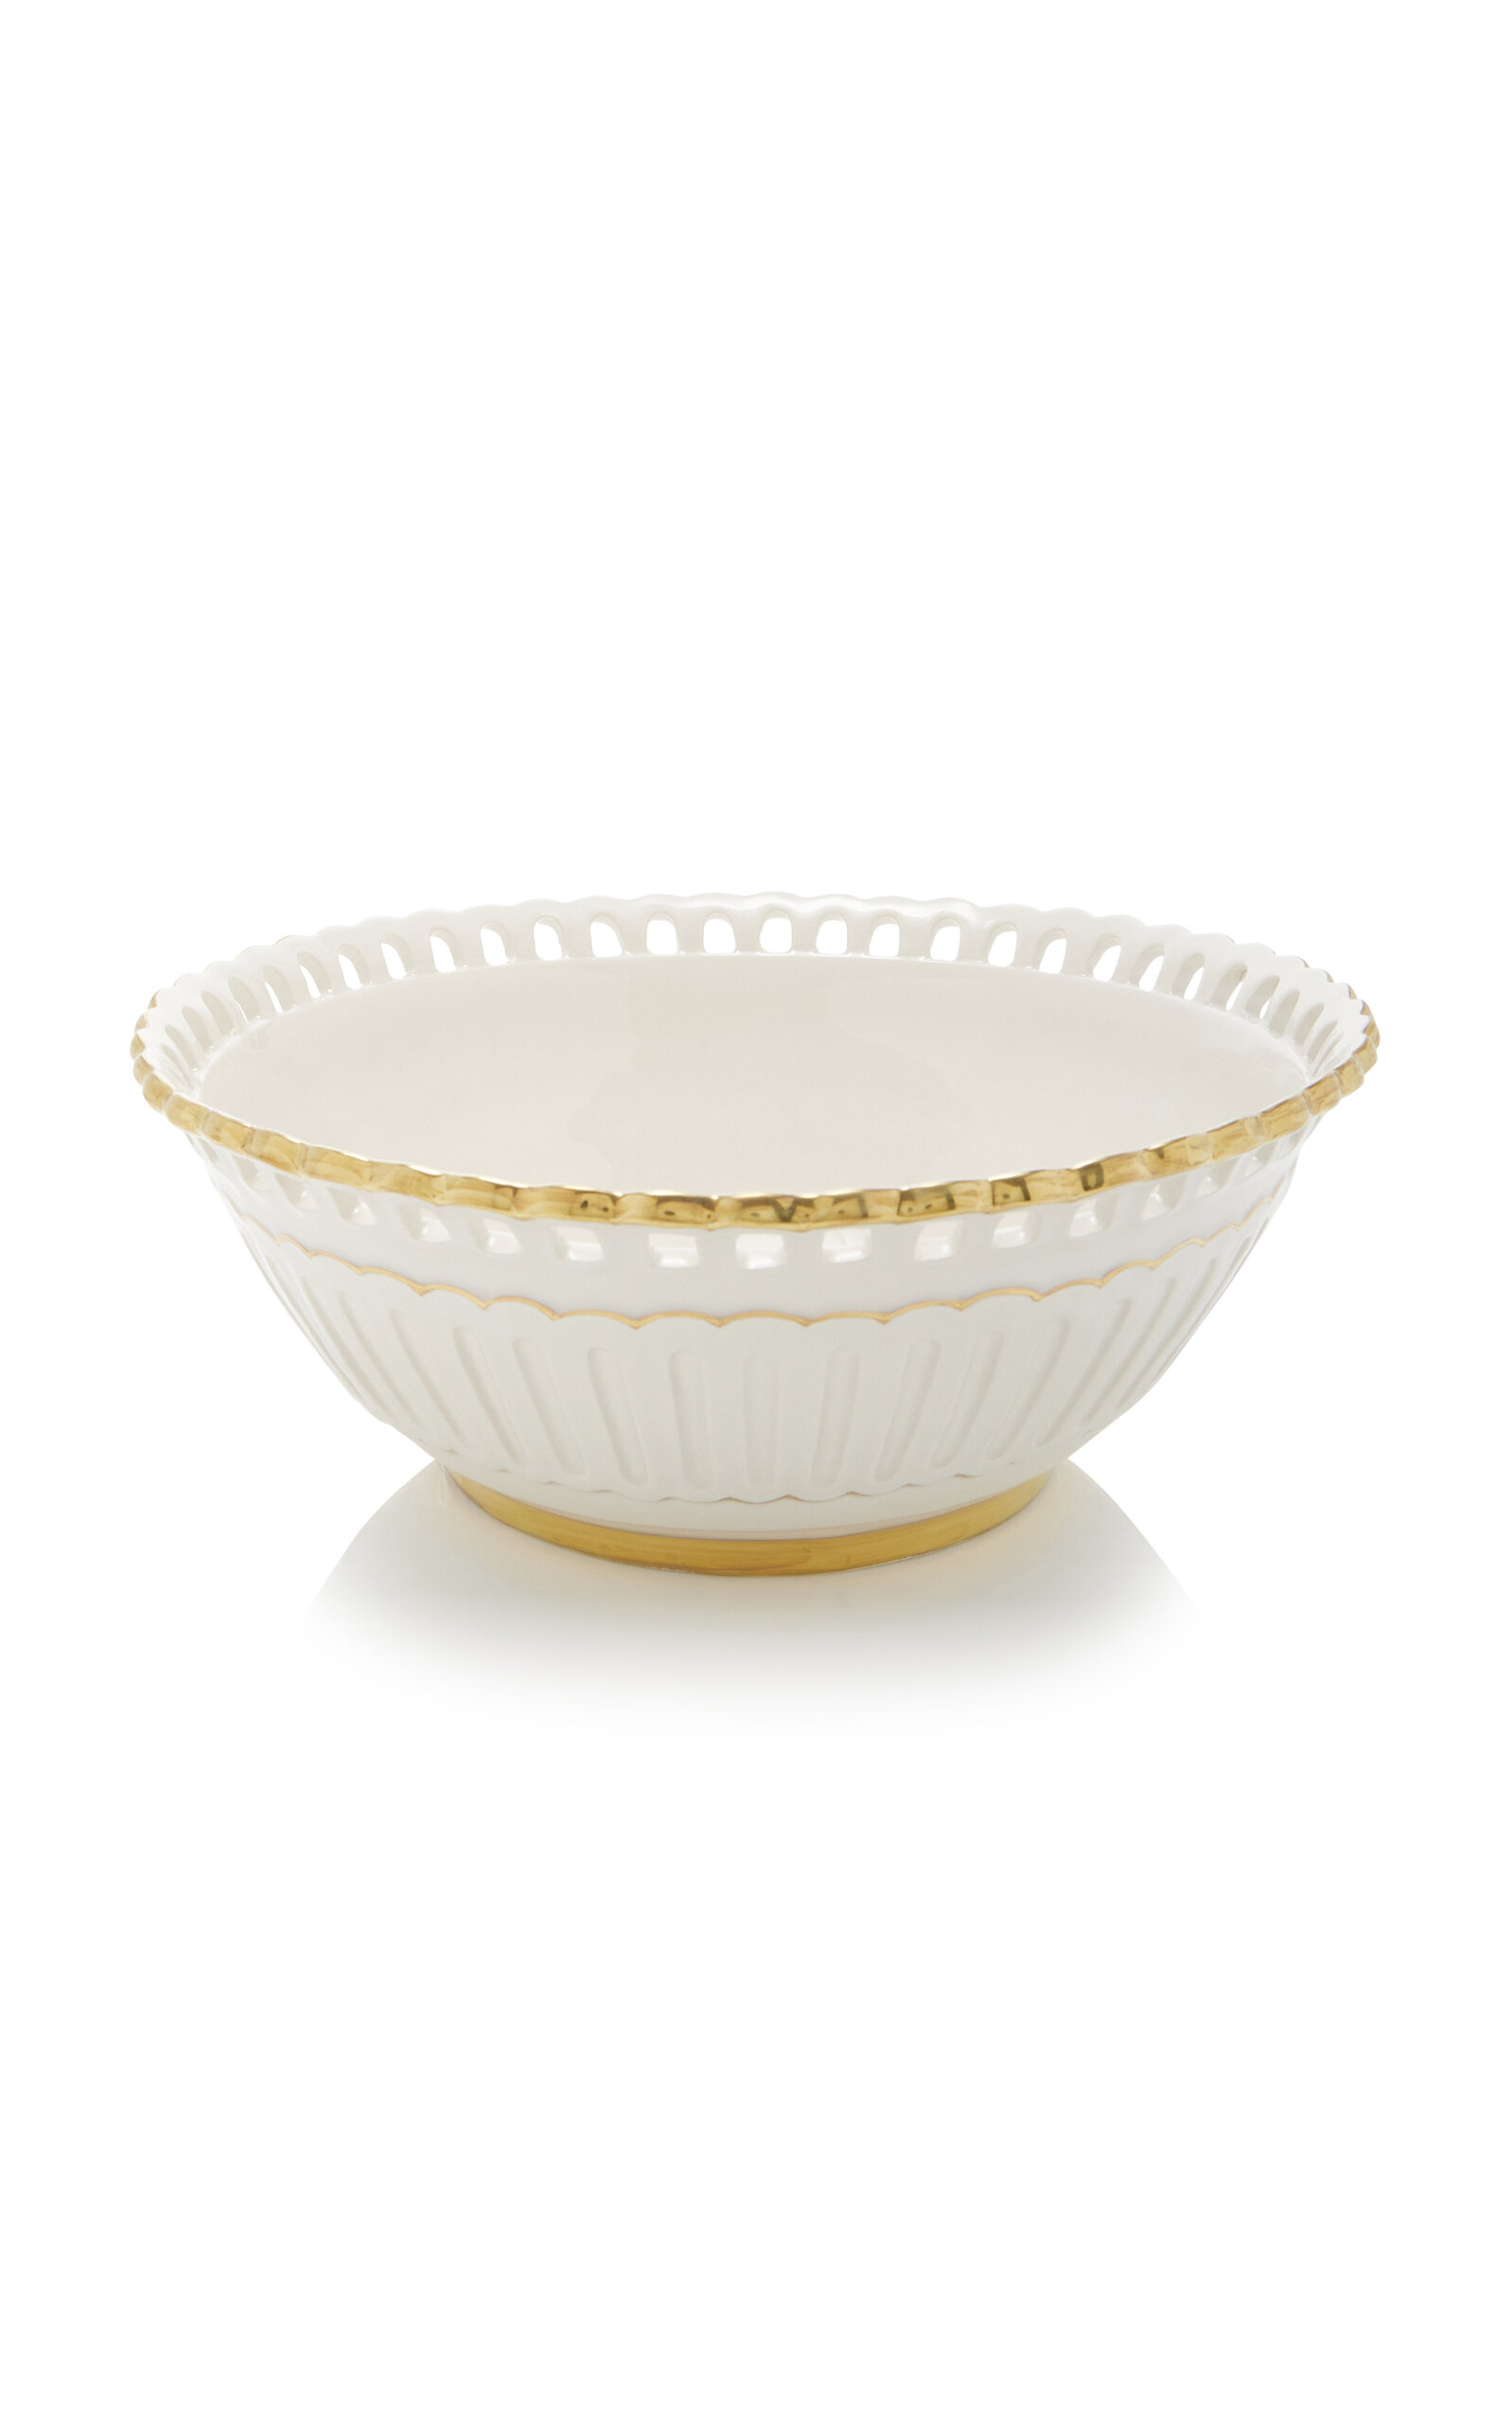 Moda Domus Balconata Creamware Large Salad Bowl In Gold